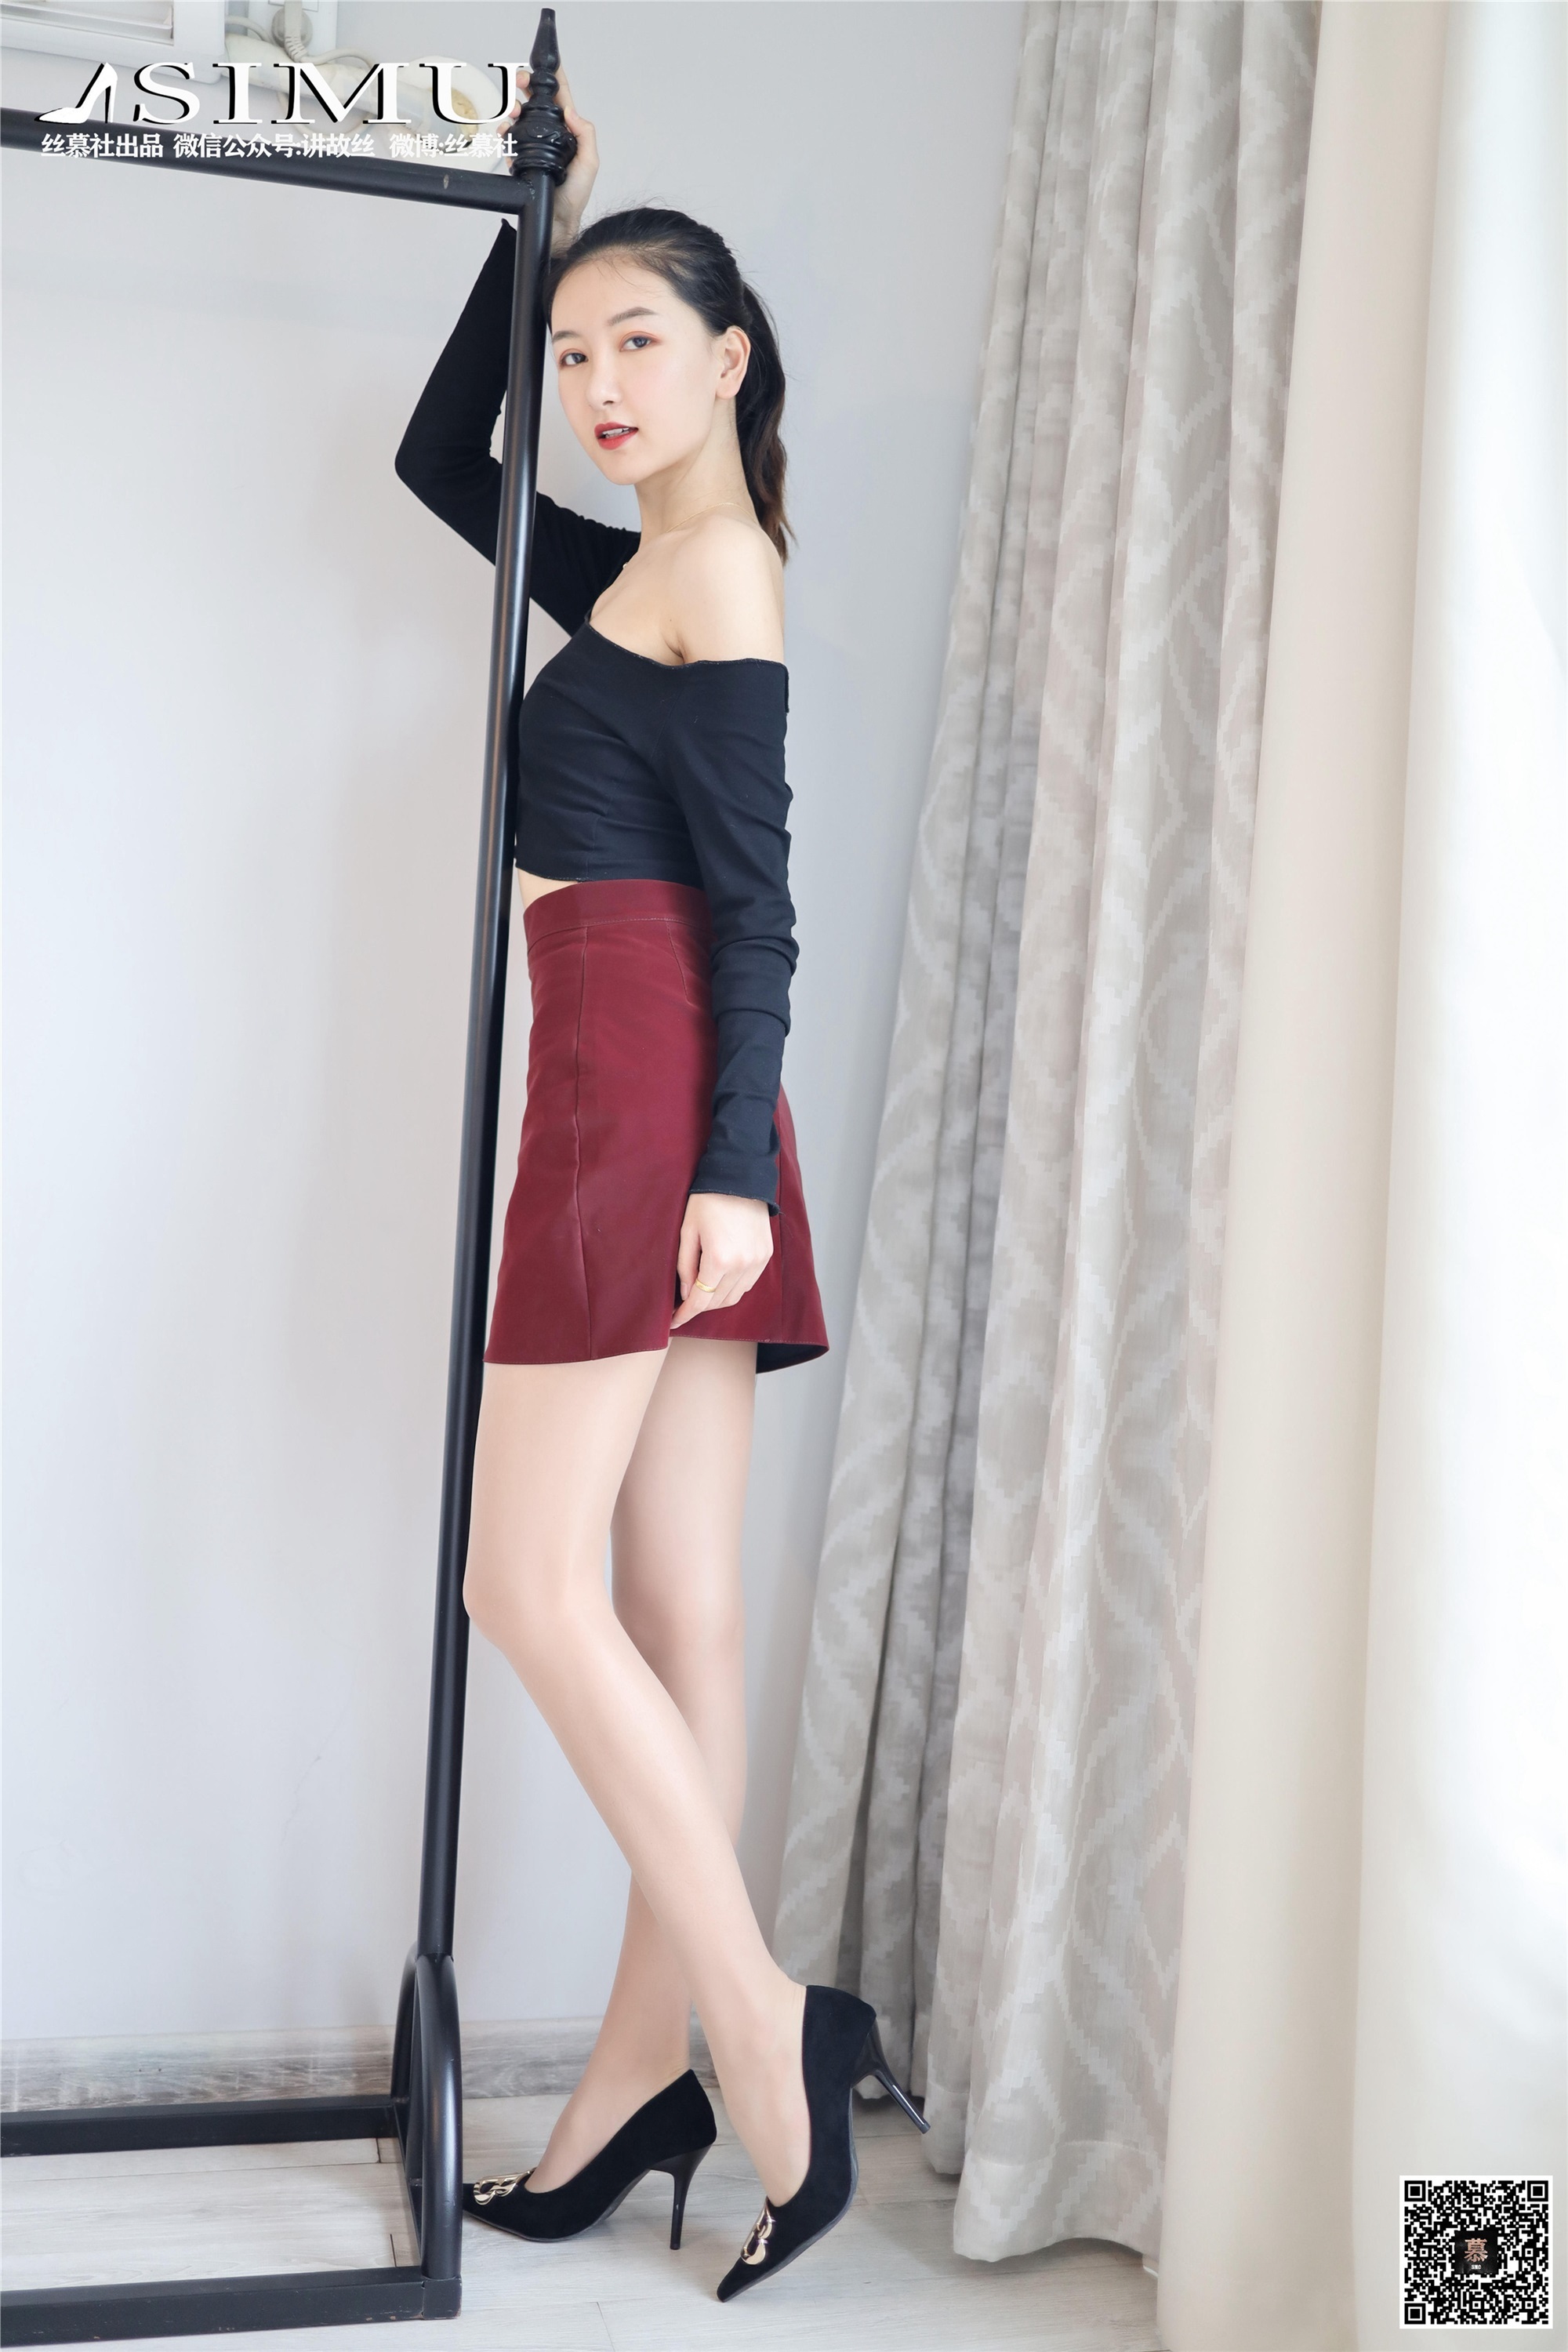 Simu photo sm225 Mingming's skirt or trousers